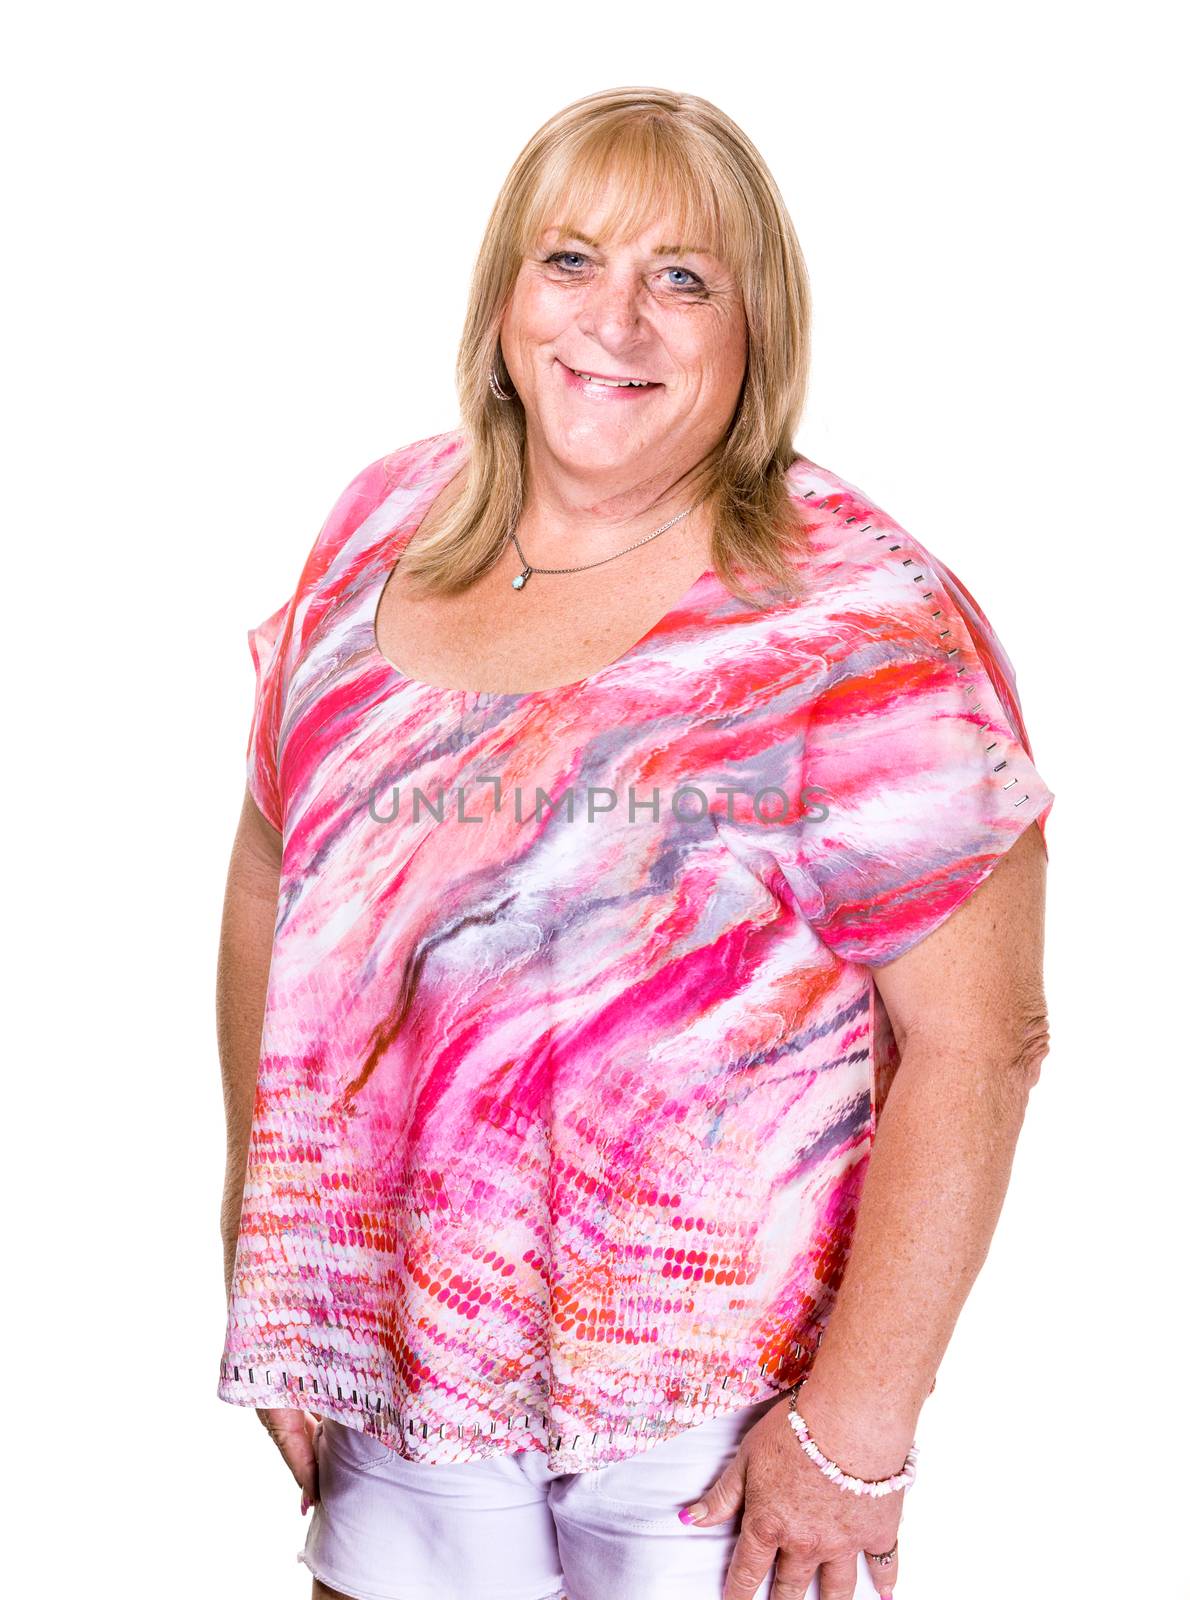 Transgender Woman in Tie Dye SHirt by Creatista